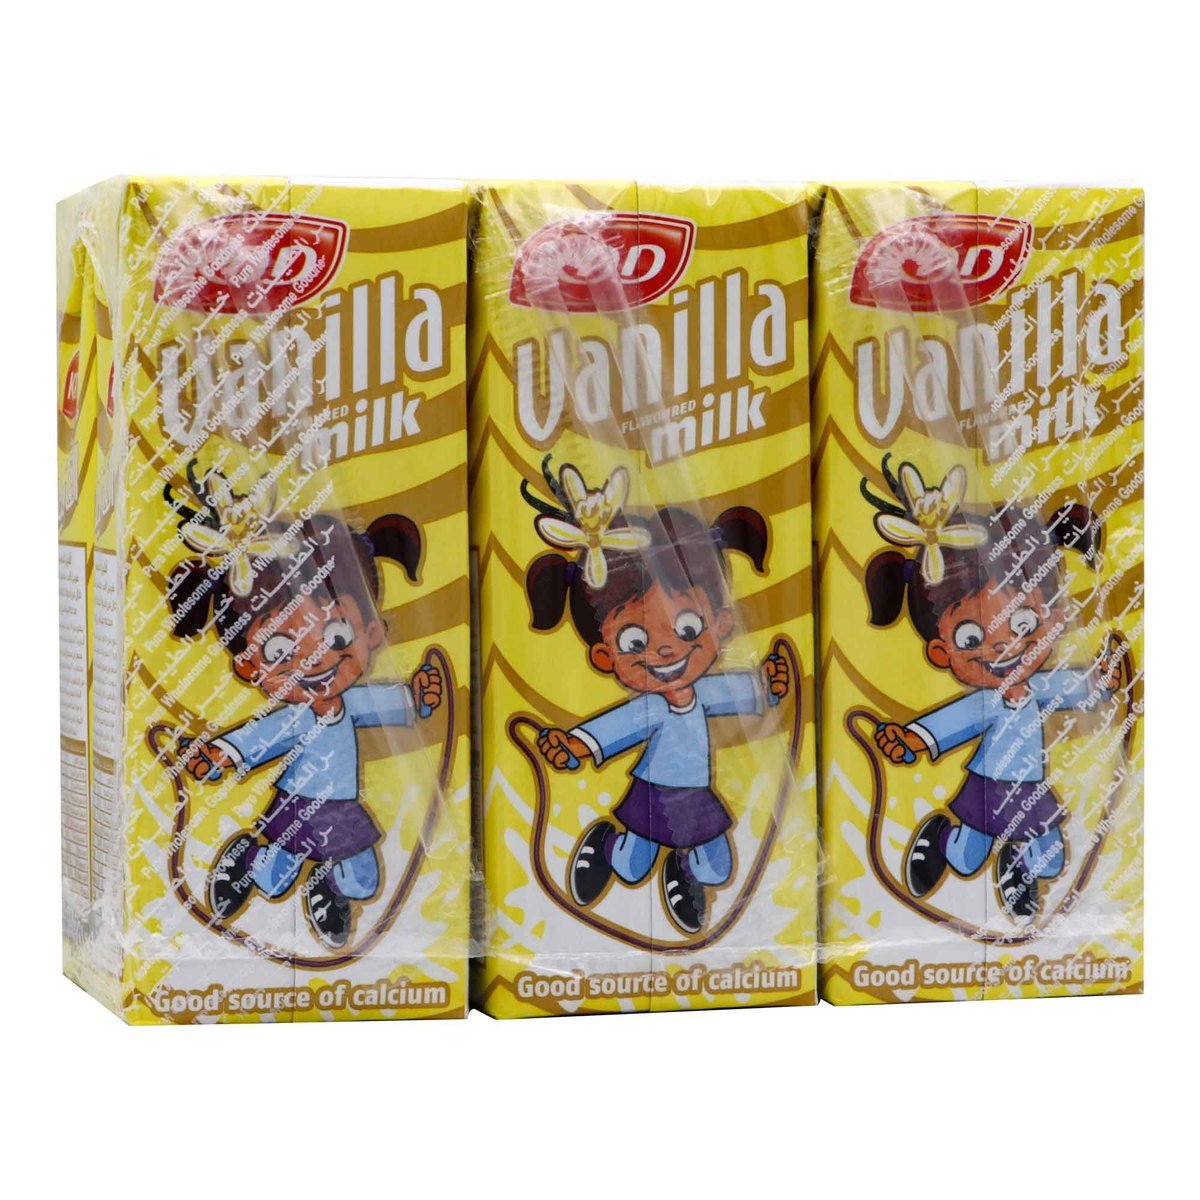 Buy KDD Vanilla Flavoured Milk 6 x 180ml Online at Best Price | UHT flavoured milk drink | Lulu KSA in Saudi Arabia